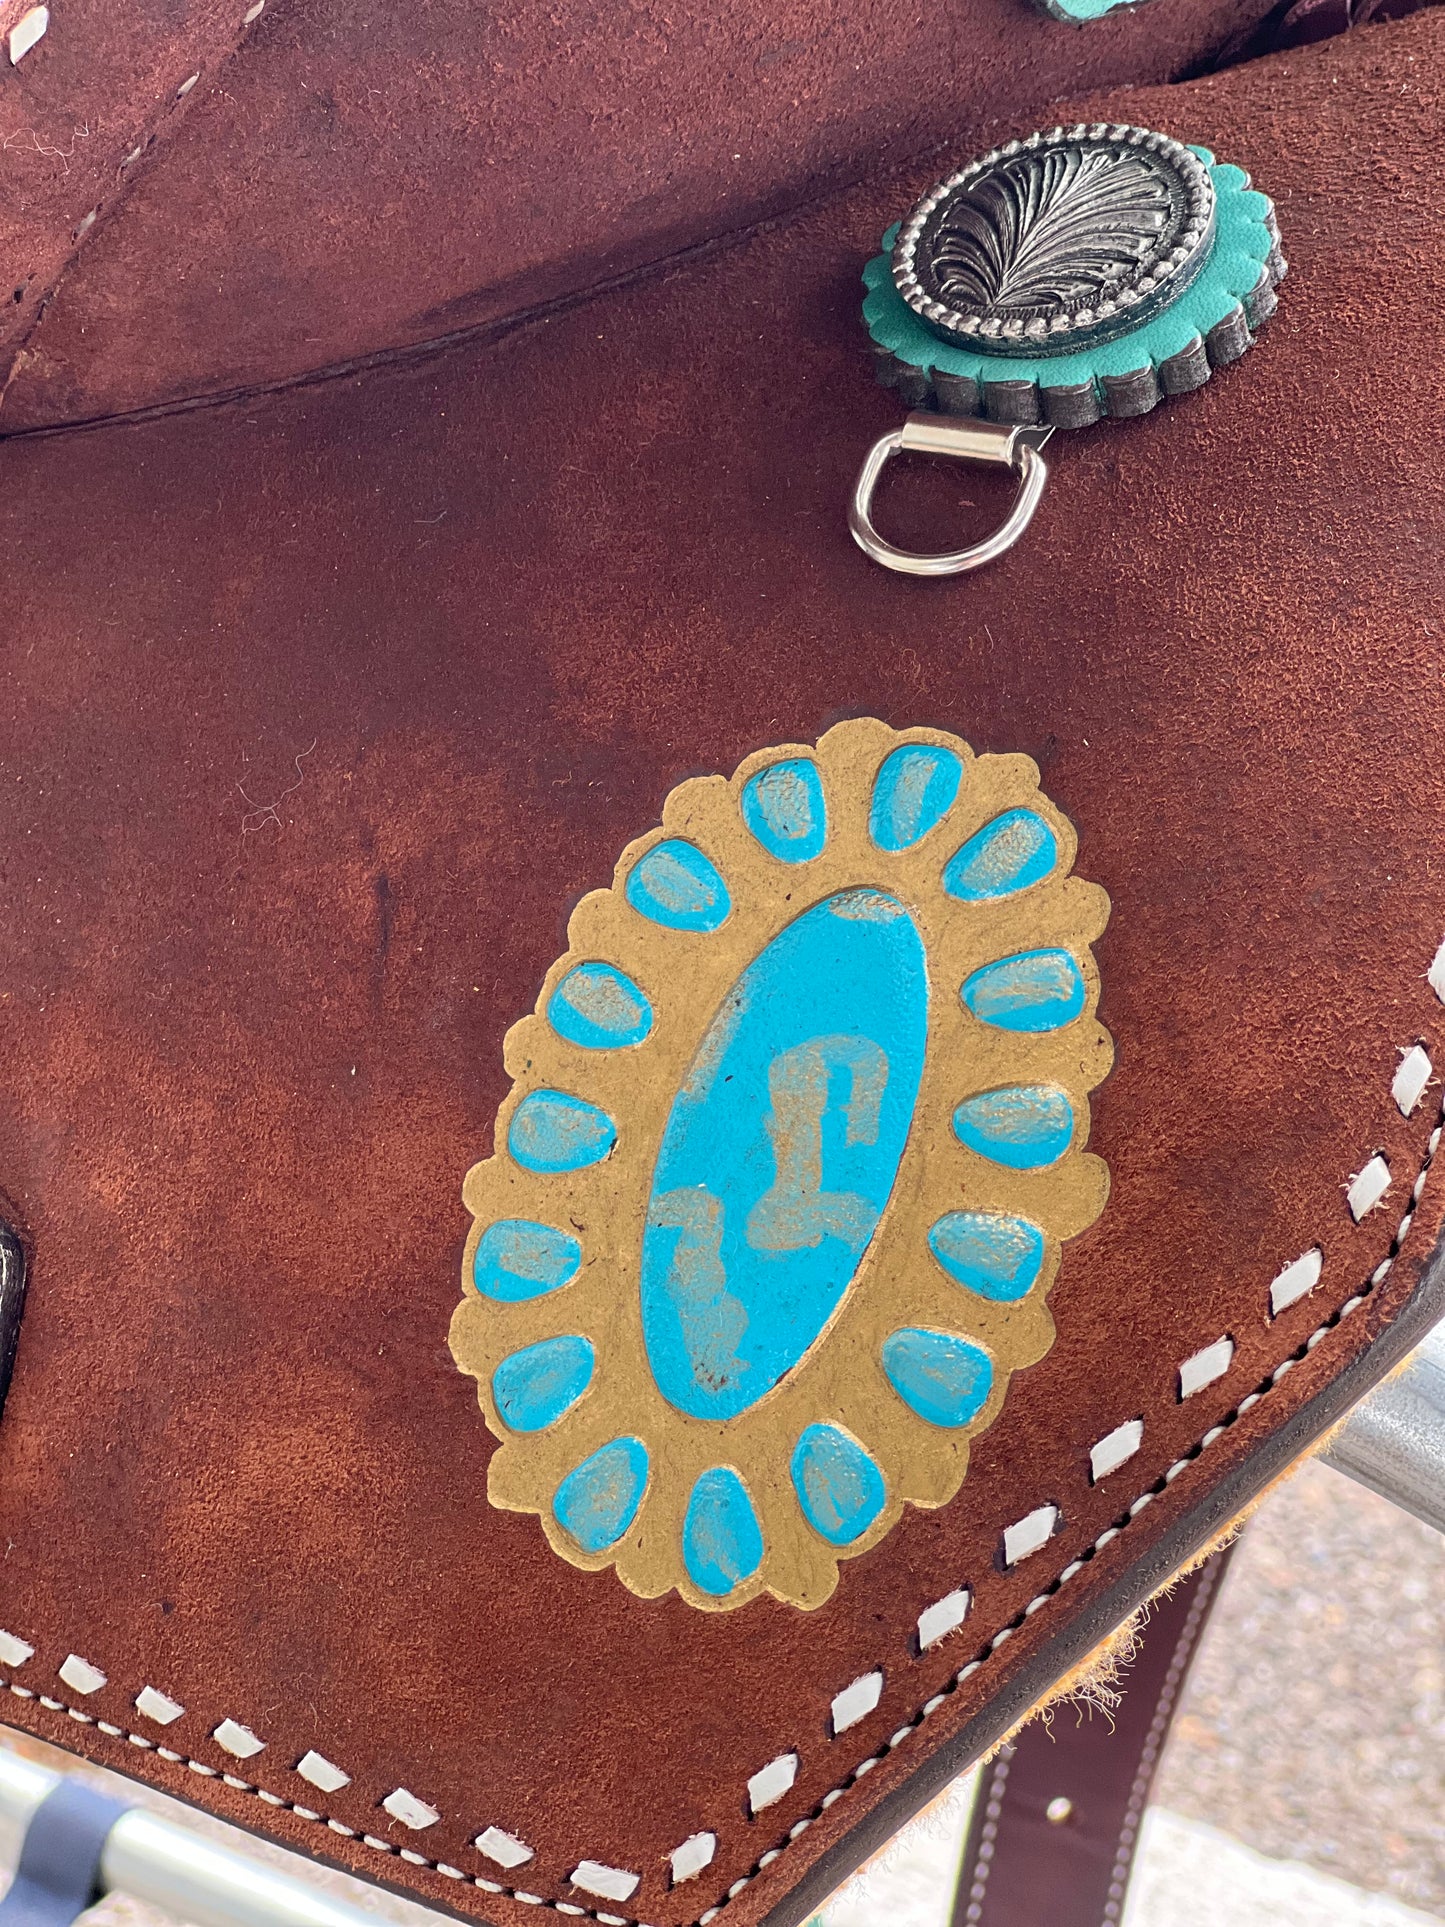 14" Turquoise Cowgirl Barrel Saddle